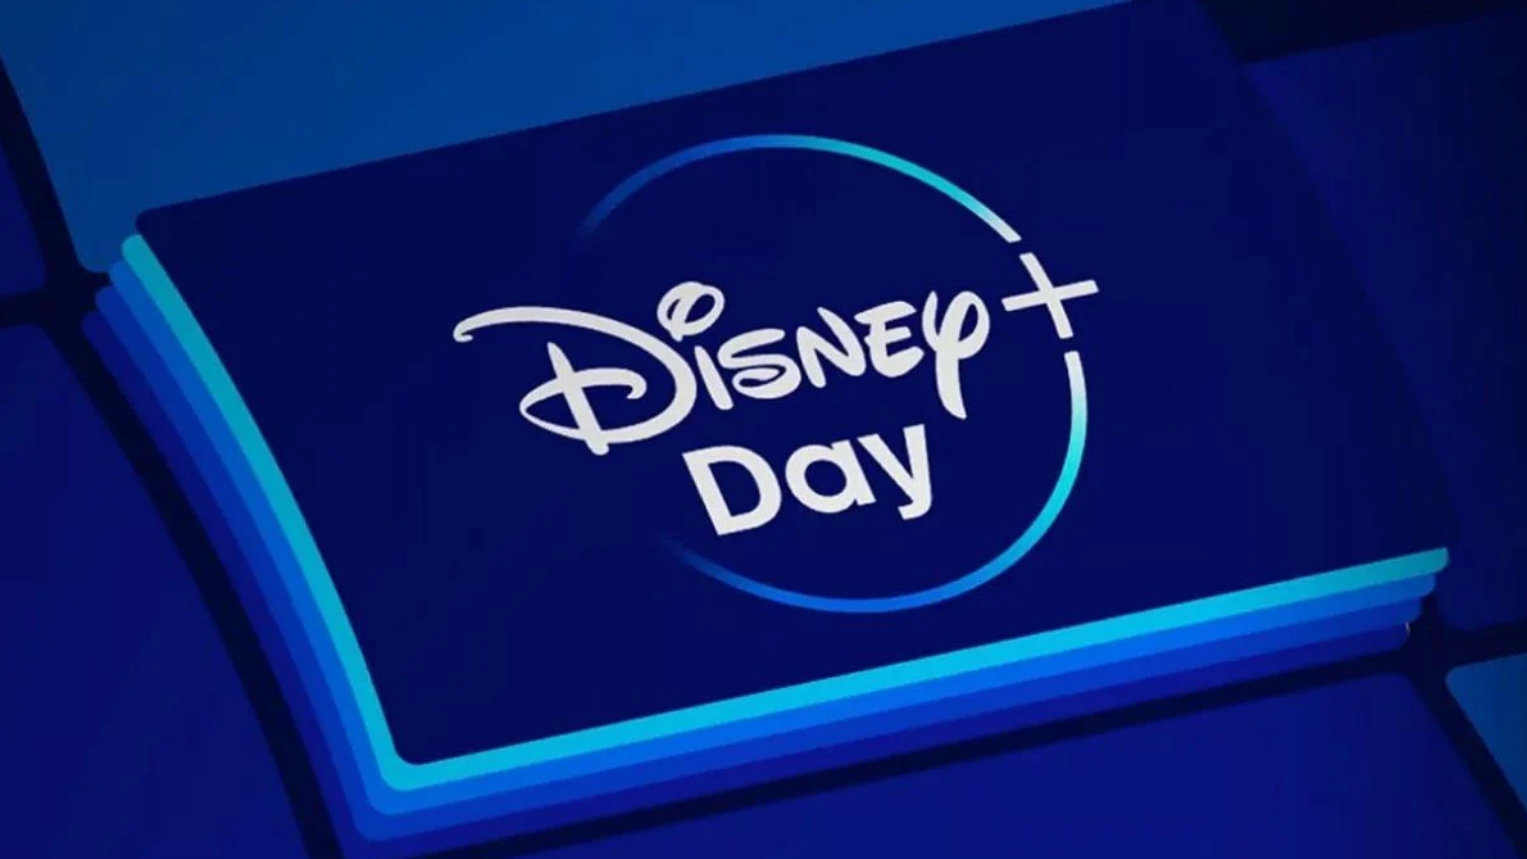 Disney plus day